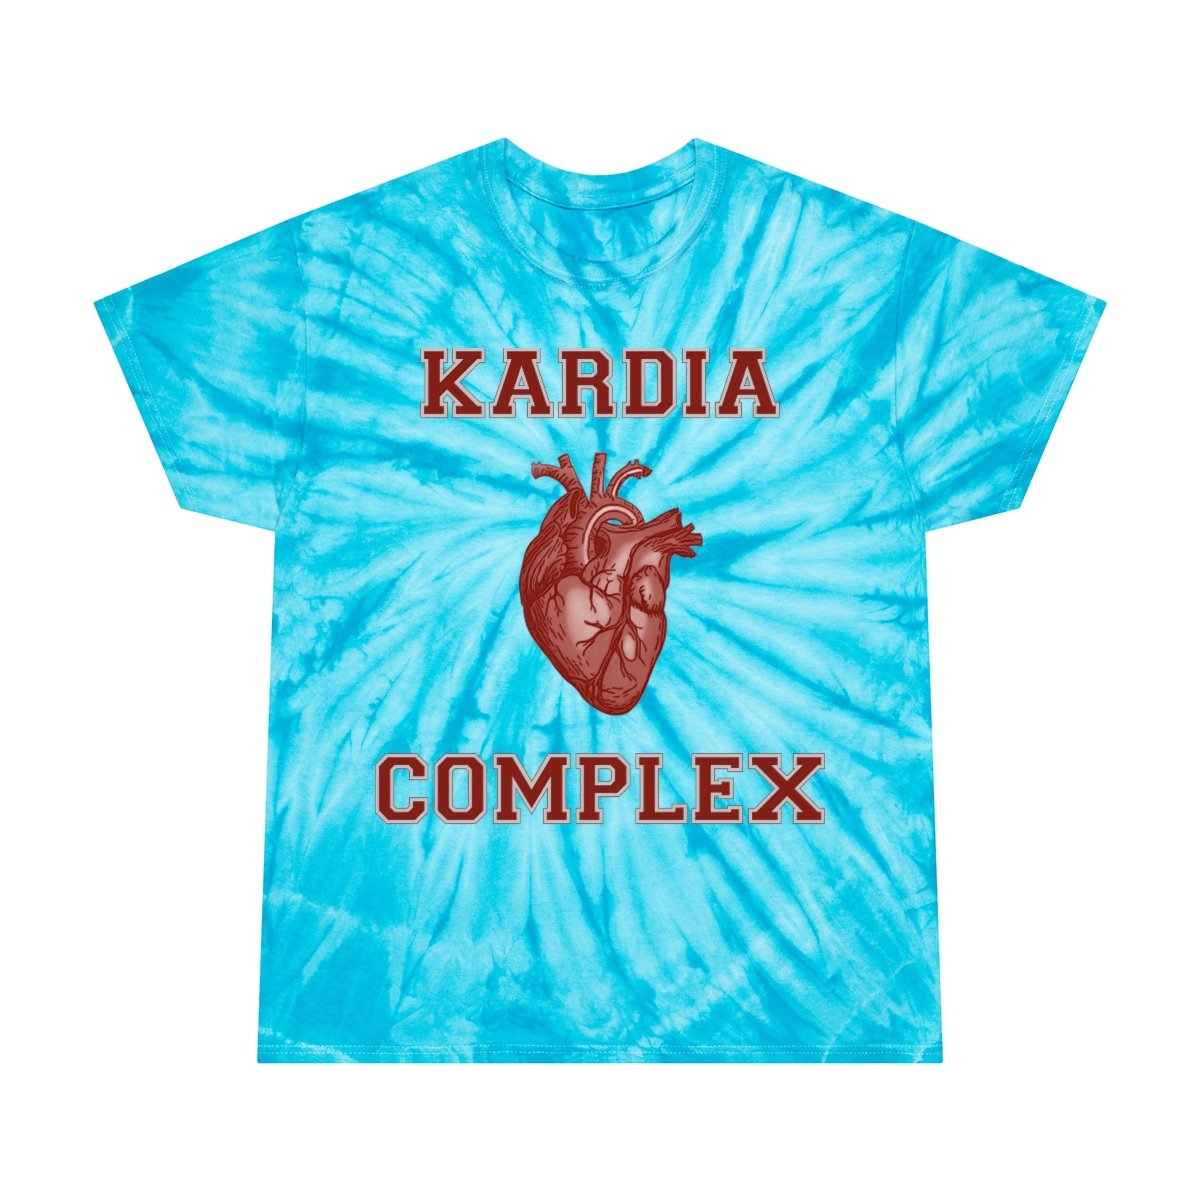 Kardia Complex Tie-Dyed Short Sleeve Tshirt